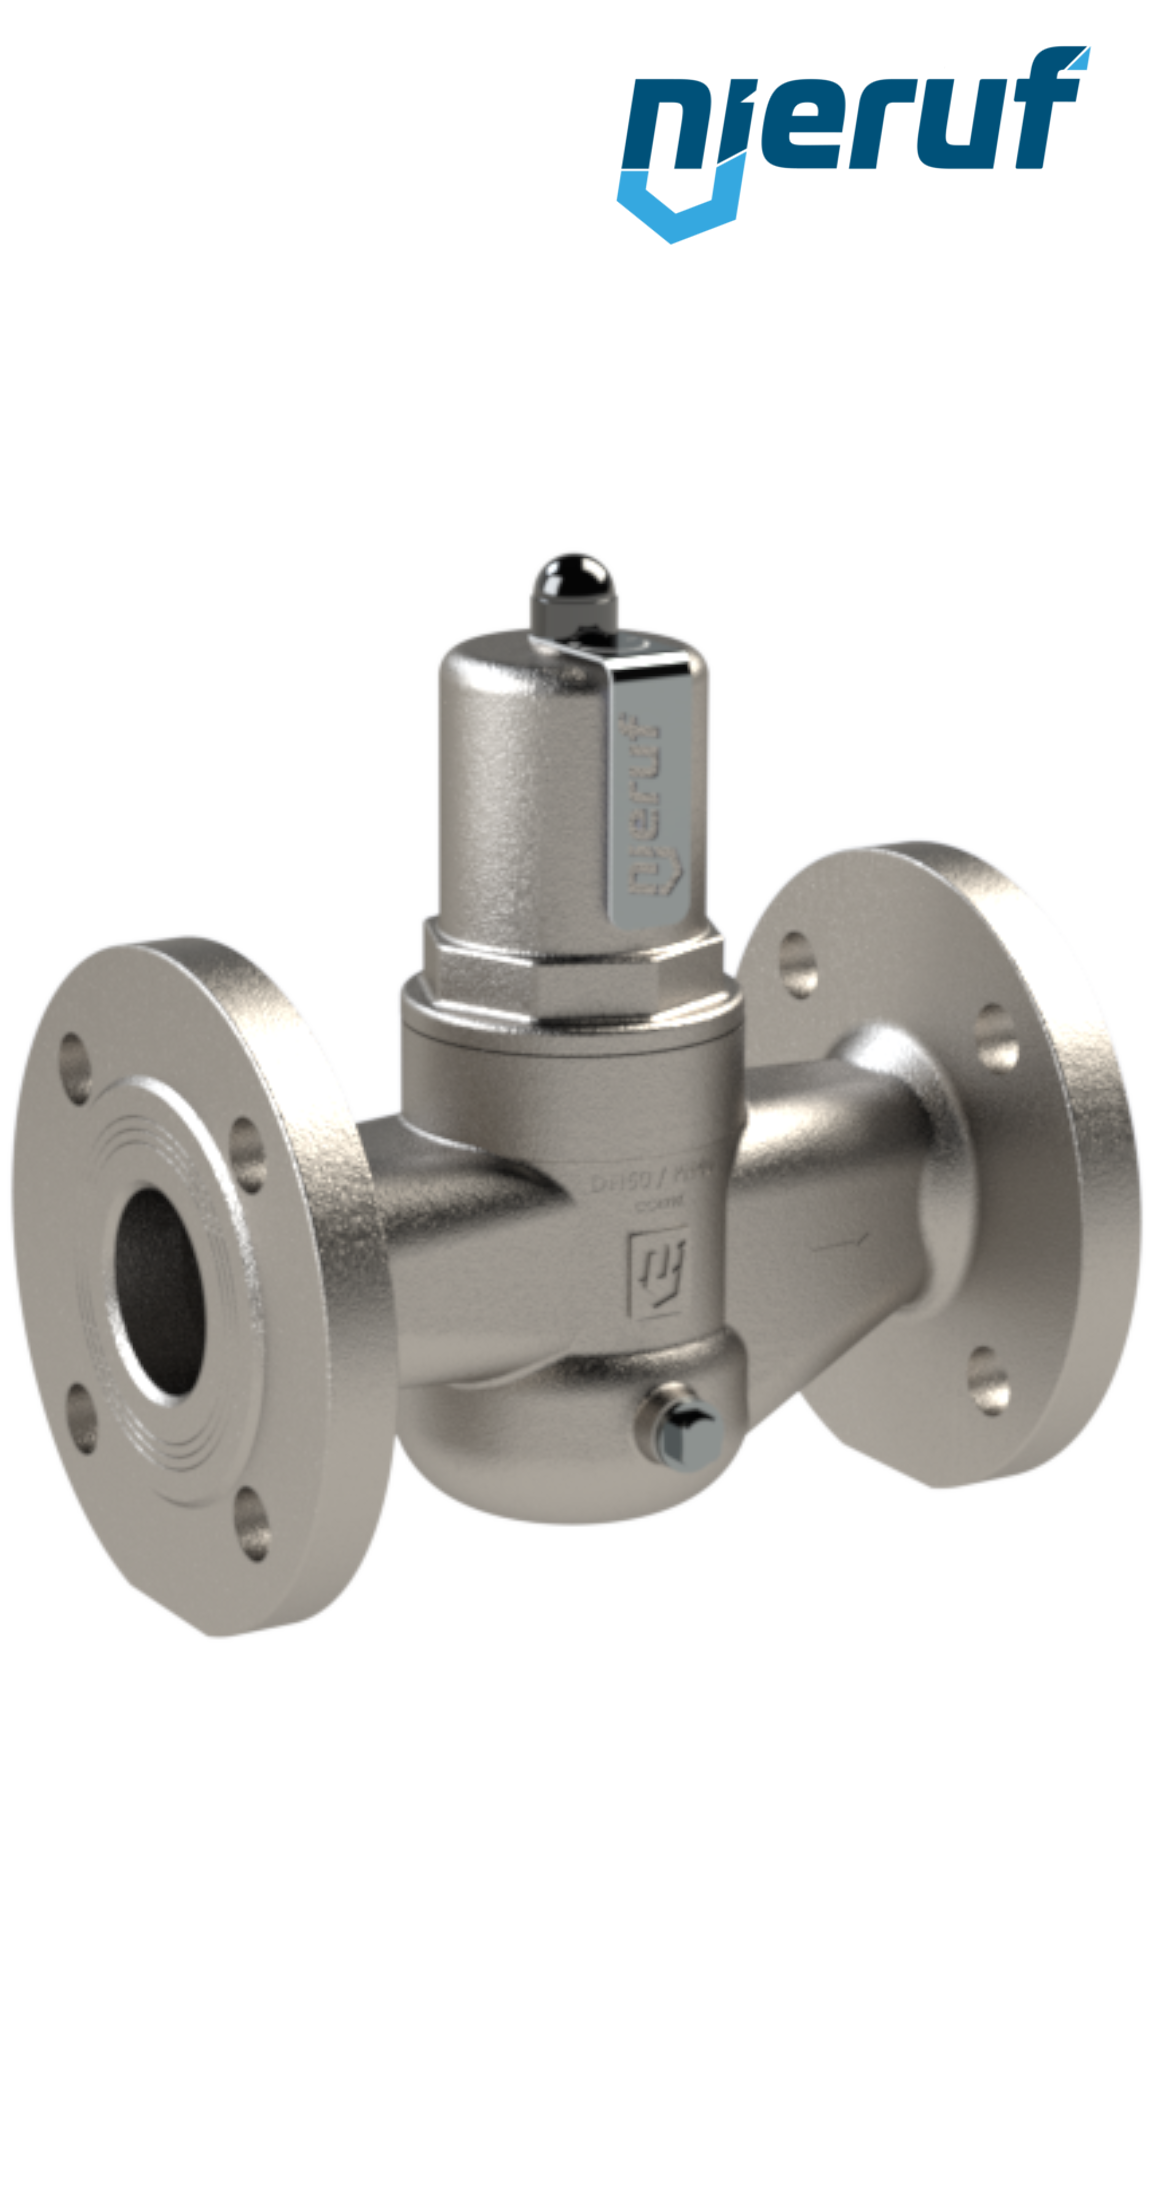 Flange-pressure reducing valve DN 32 PN40 DM08 stainless steel FKM 0.5 - 2.0 bar